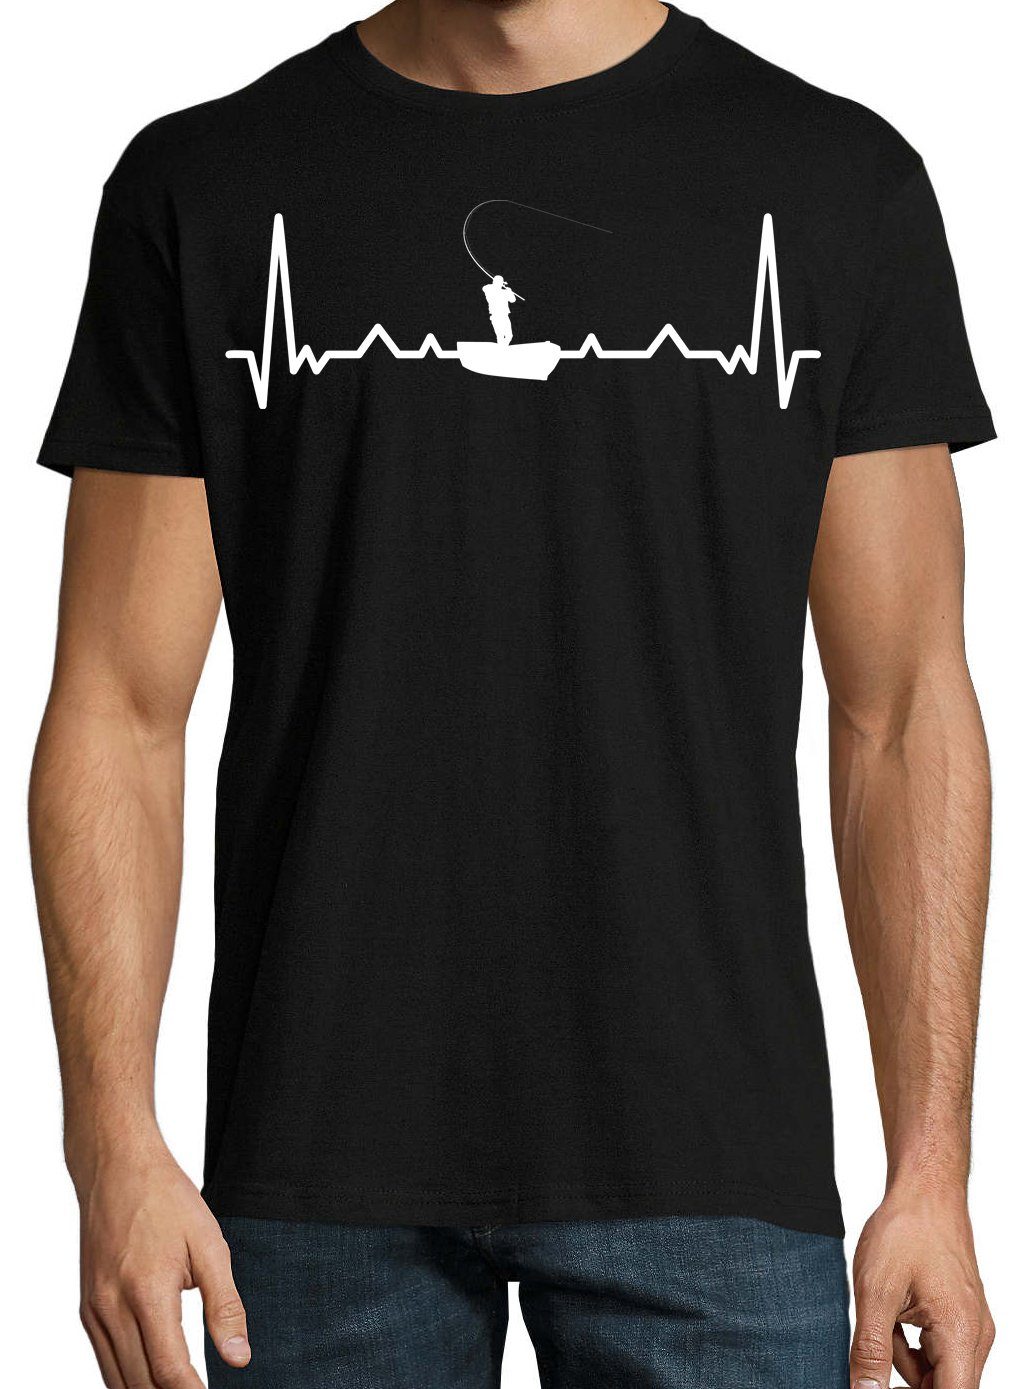 Angler Angeln Youth Herren T-Shirt Schwarz Shirt lustigem Heartbeat Designz mit Frontprint